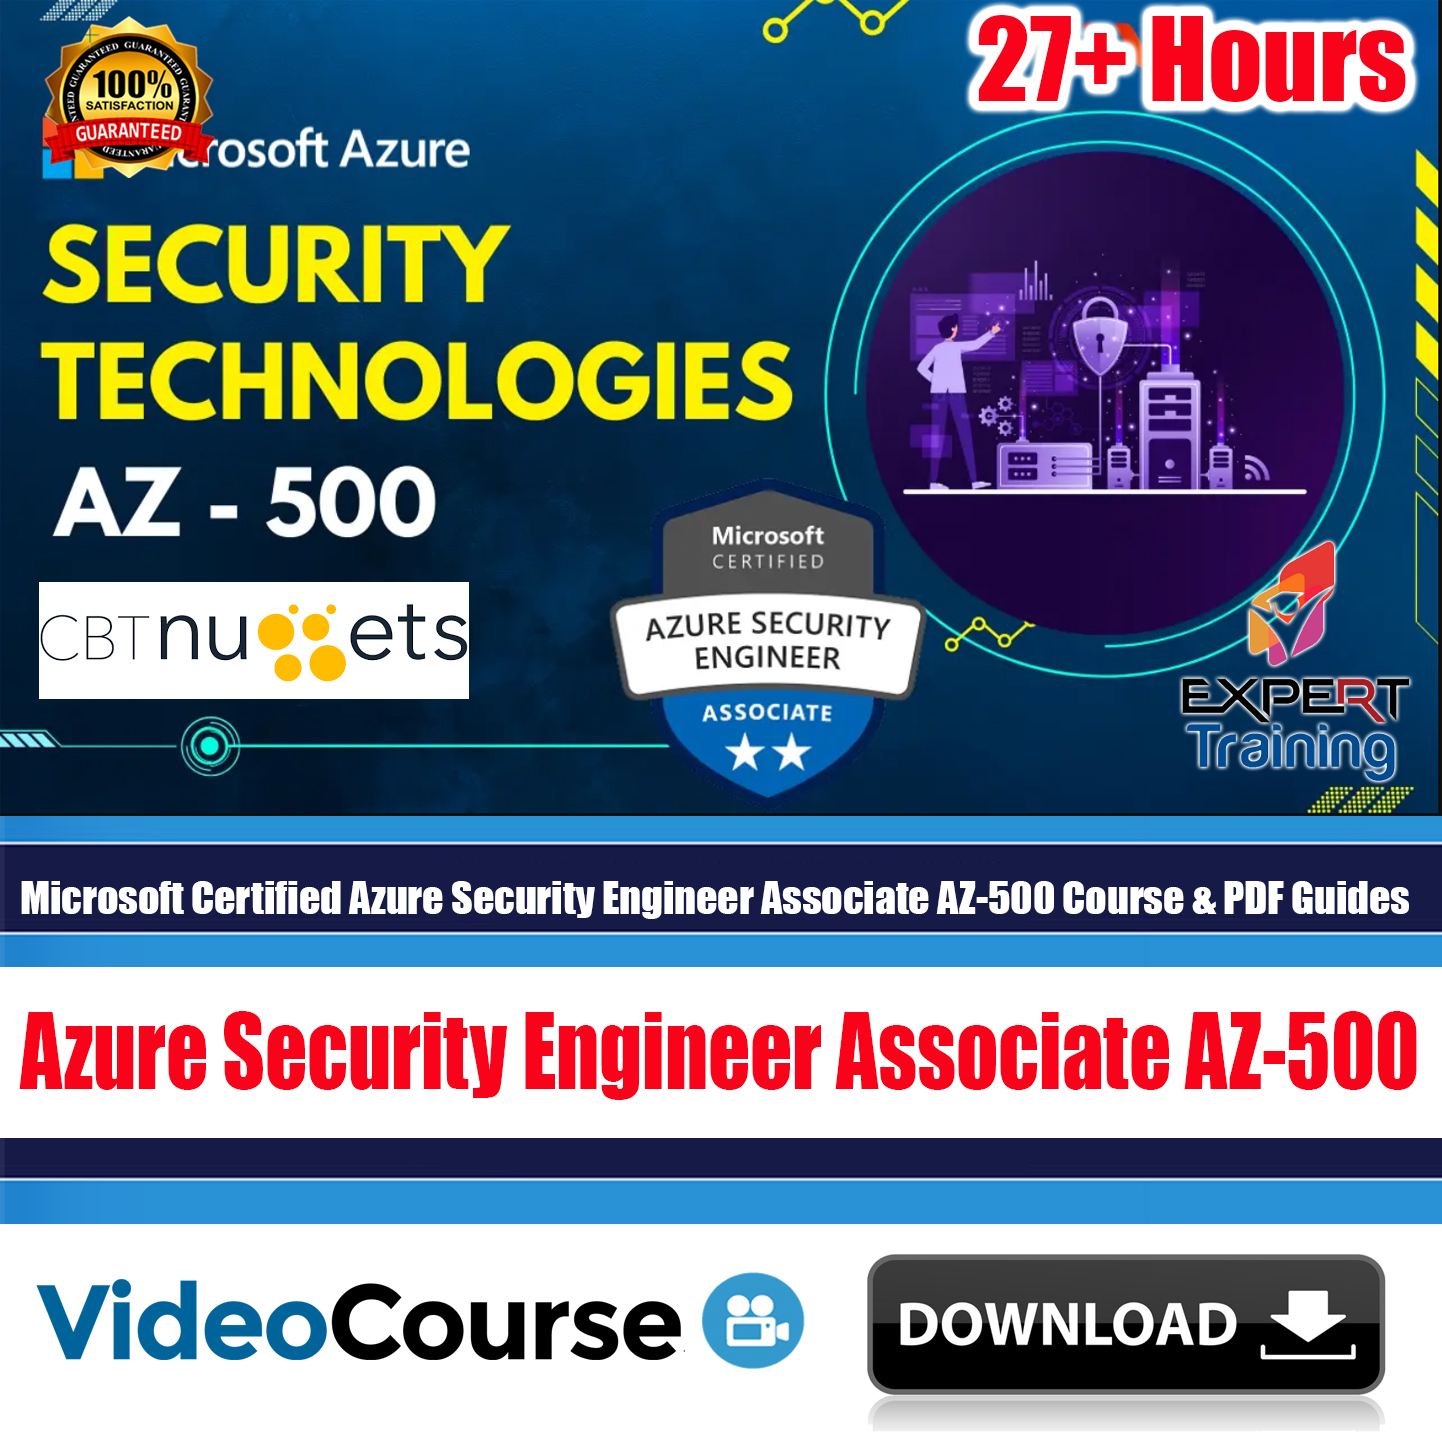 Microsoft Certified Azure Security Engineer Associate AZ-500 Course & PDF Guides